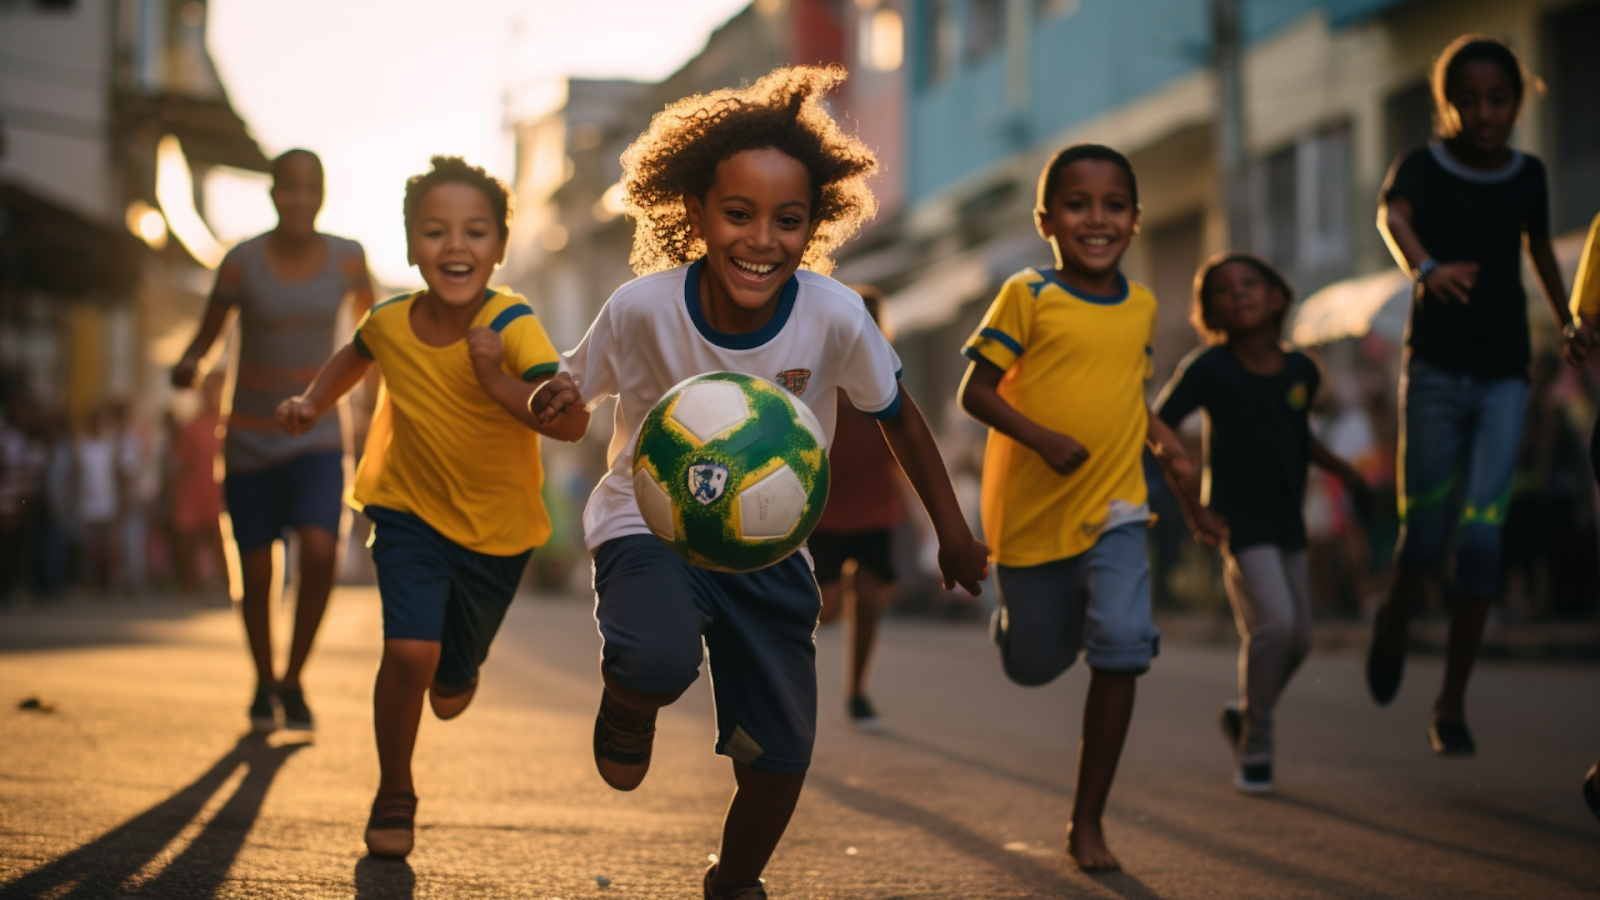 Joyful children dash through an urban street in Brazil, a football at their feet, depicting the grassroots love for football in Brazil.